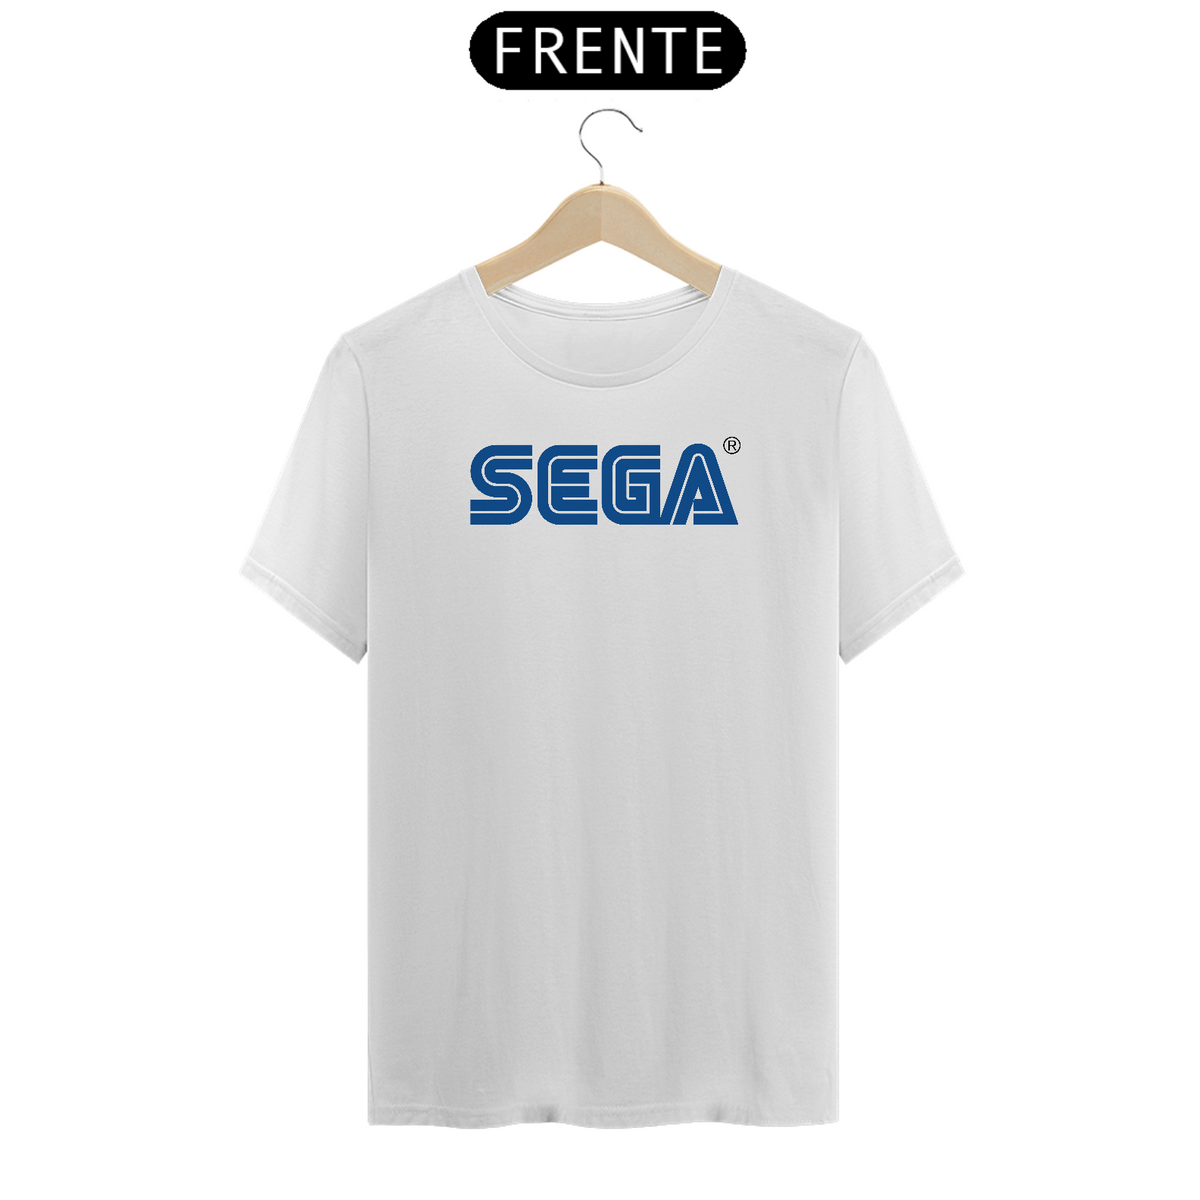 Nome do produto: Camiseta SEGA